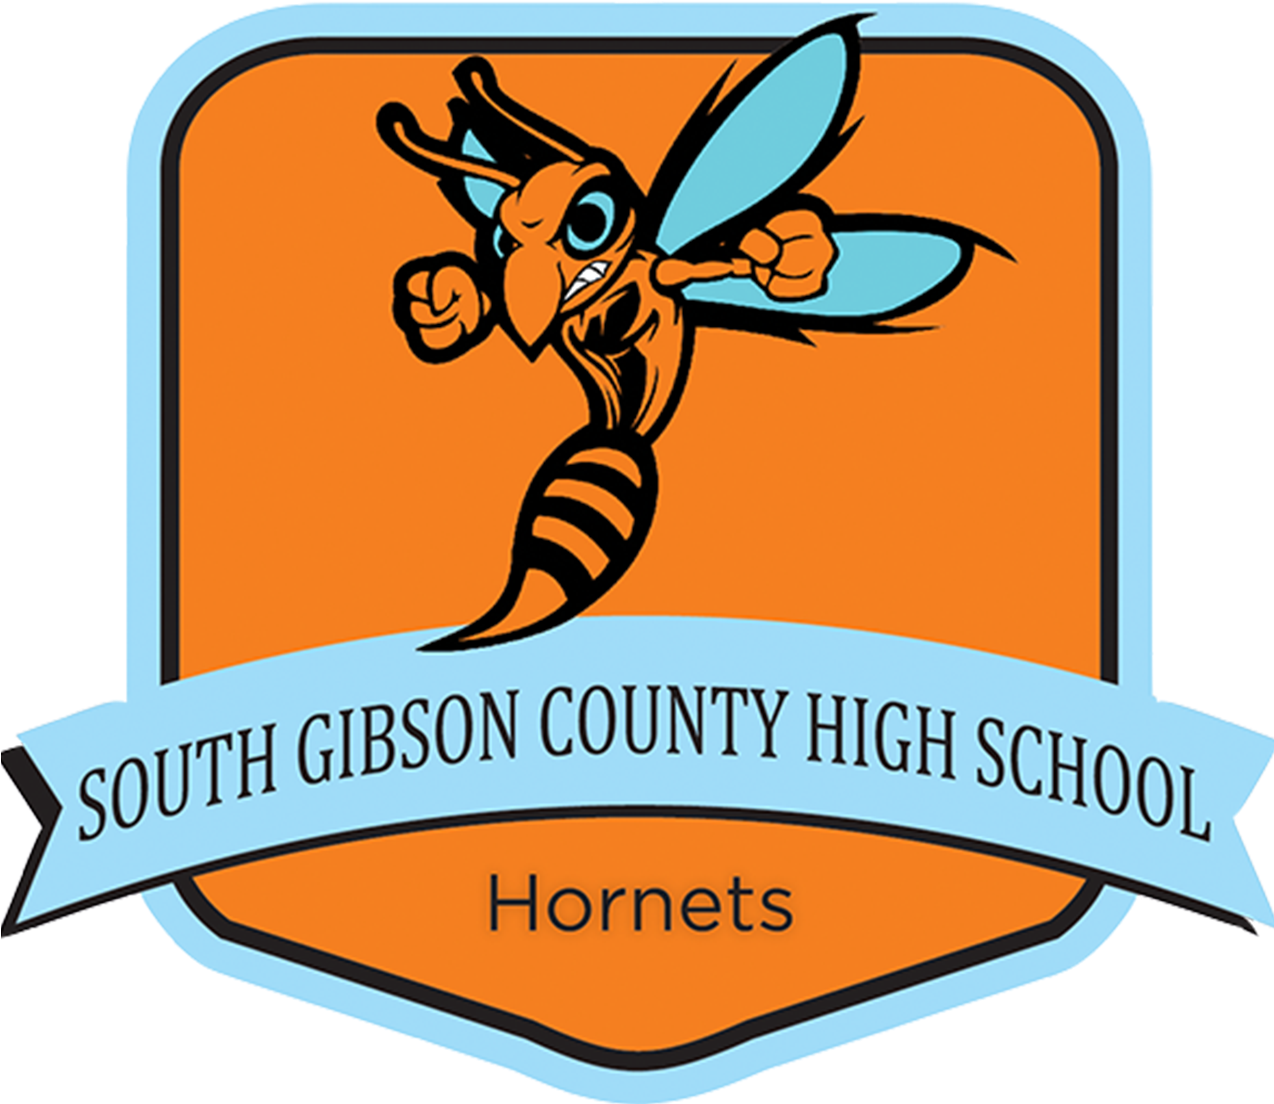 South Gibson County High School - South Gibson County High School Hornets (1273x1115)